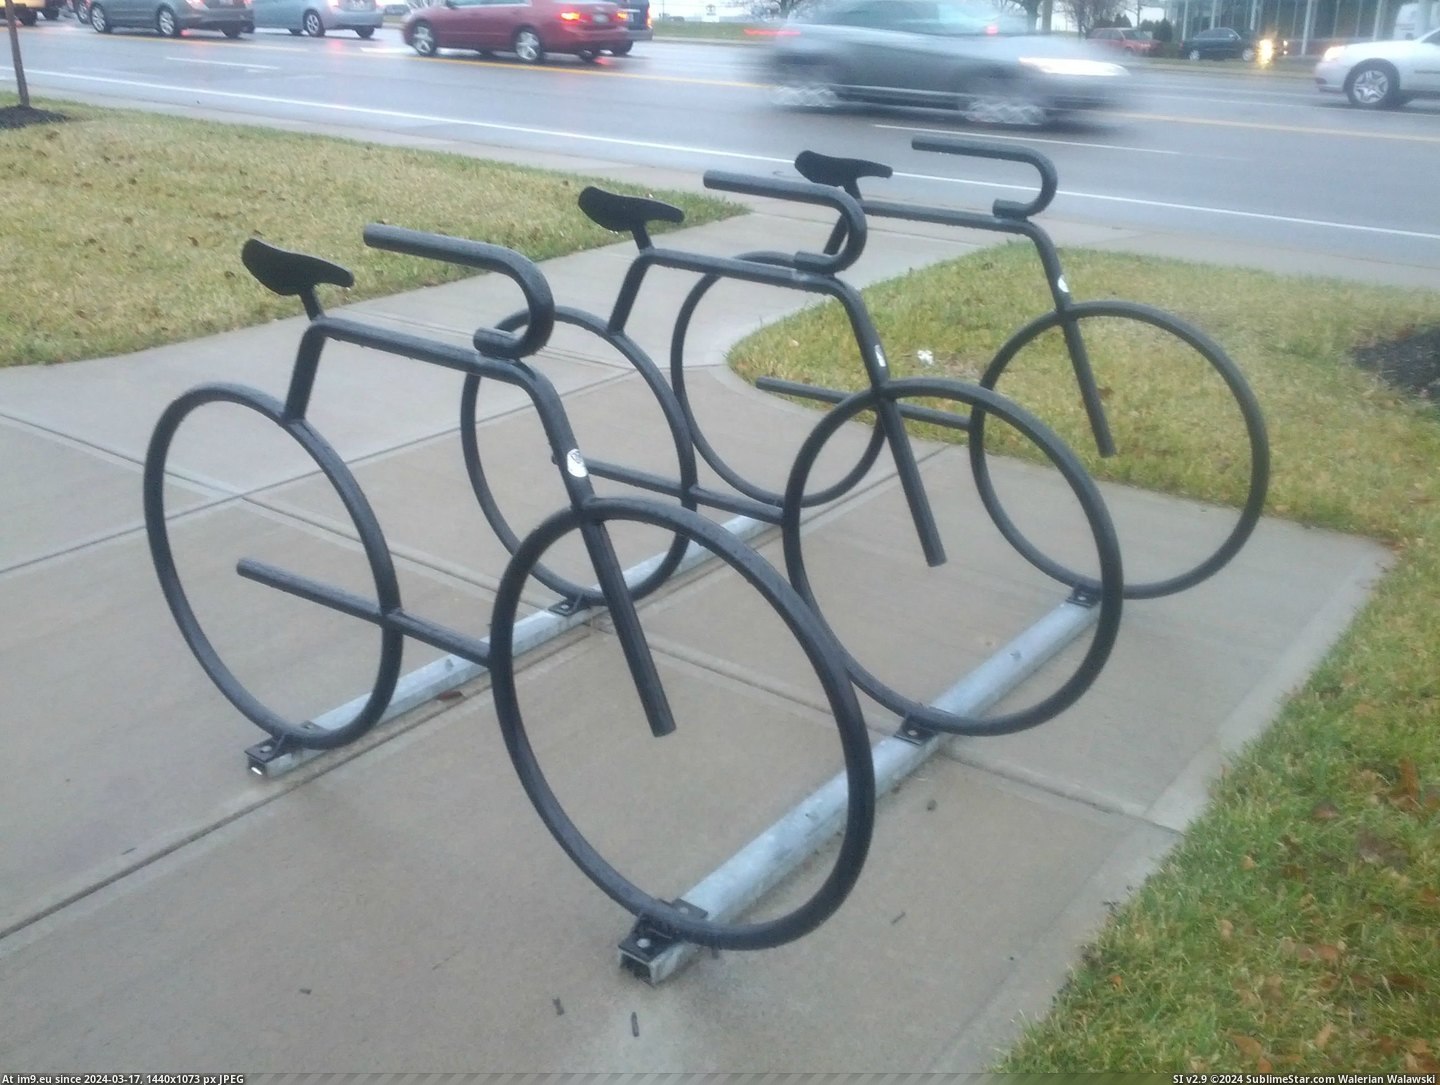 #Bike #Rack #Bikes #Shaped [Mildlyinteresting] This bike rack is shaped like bikes. 1 Pic. (Изображение из альбом My r/MILDLYINTERESTING favs))